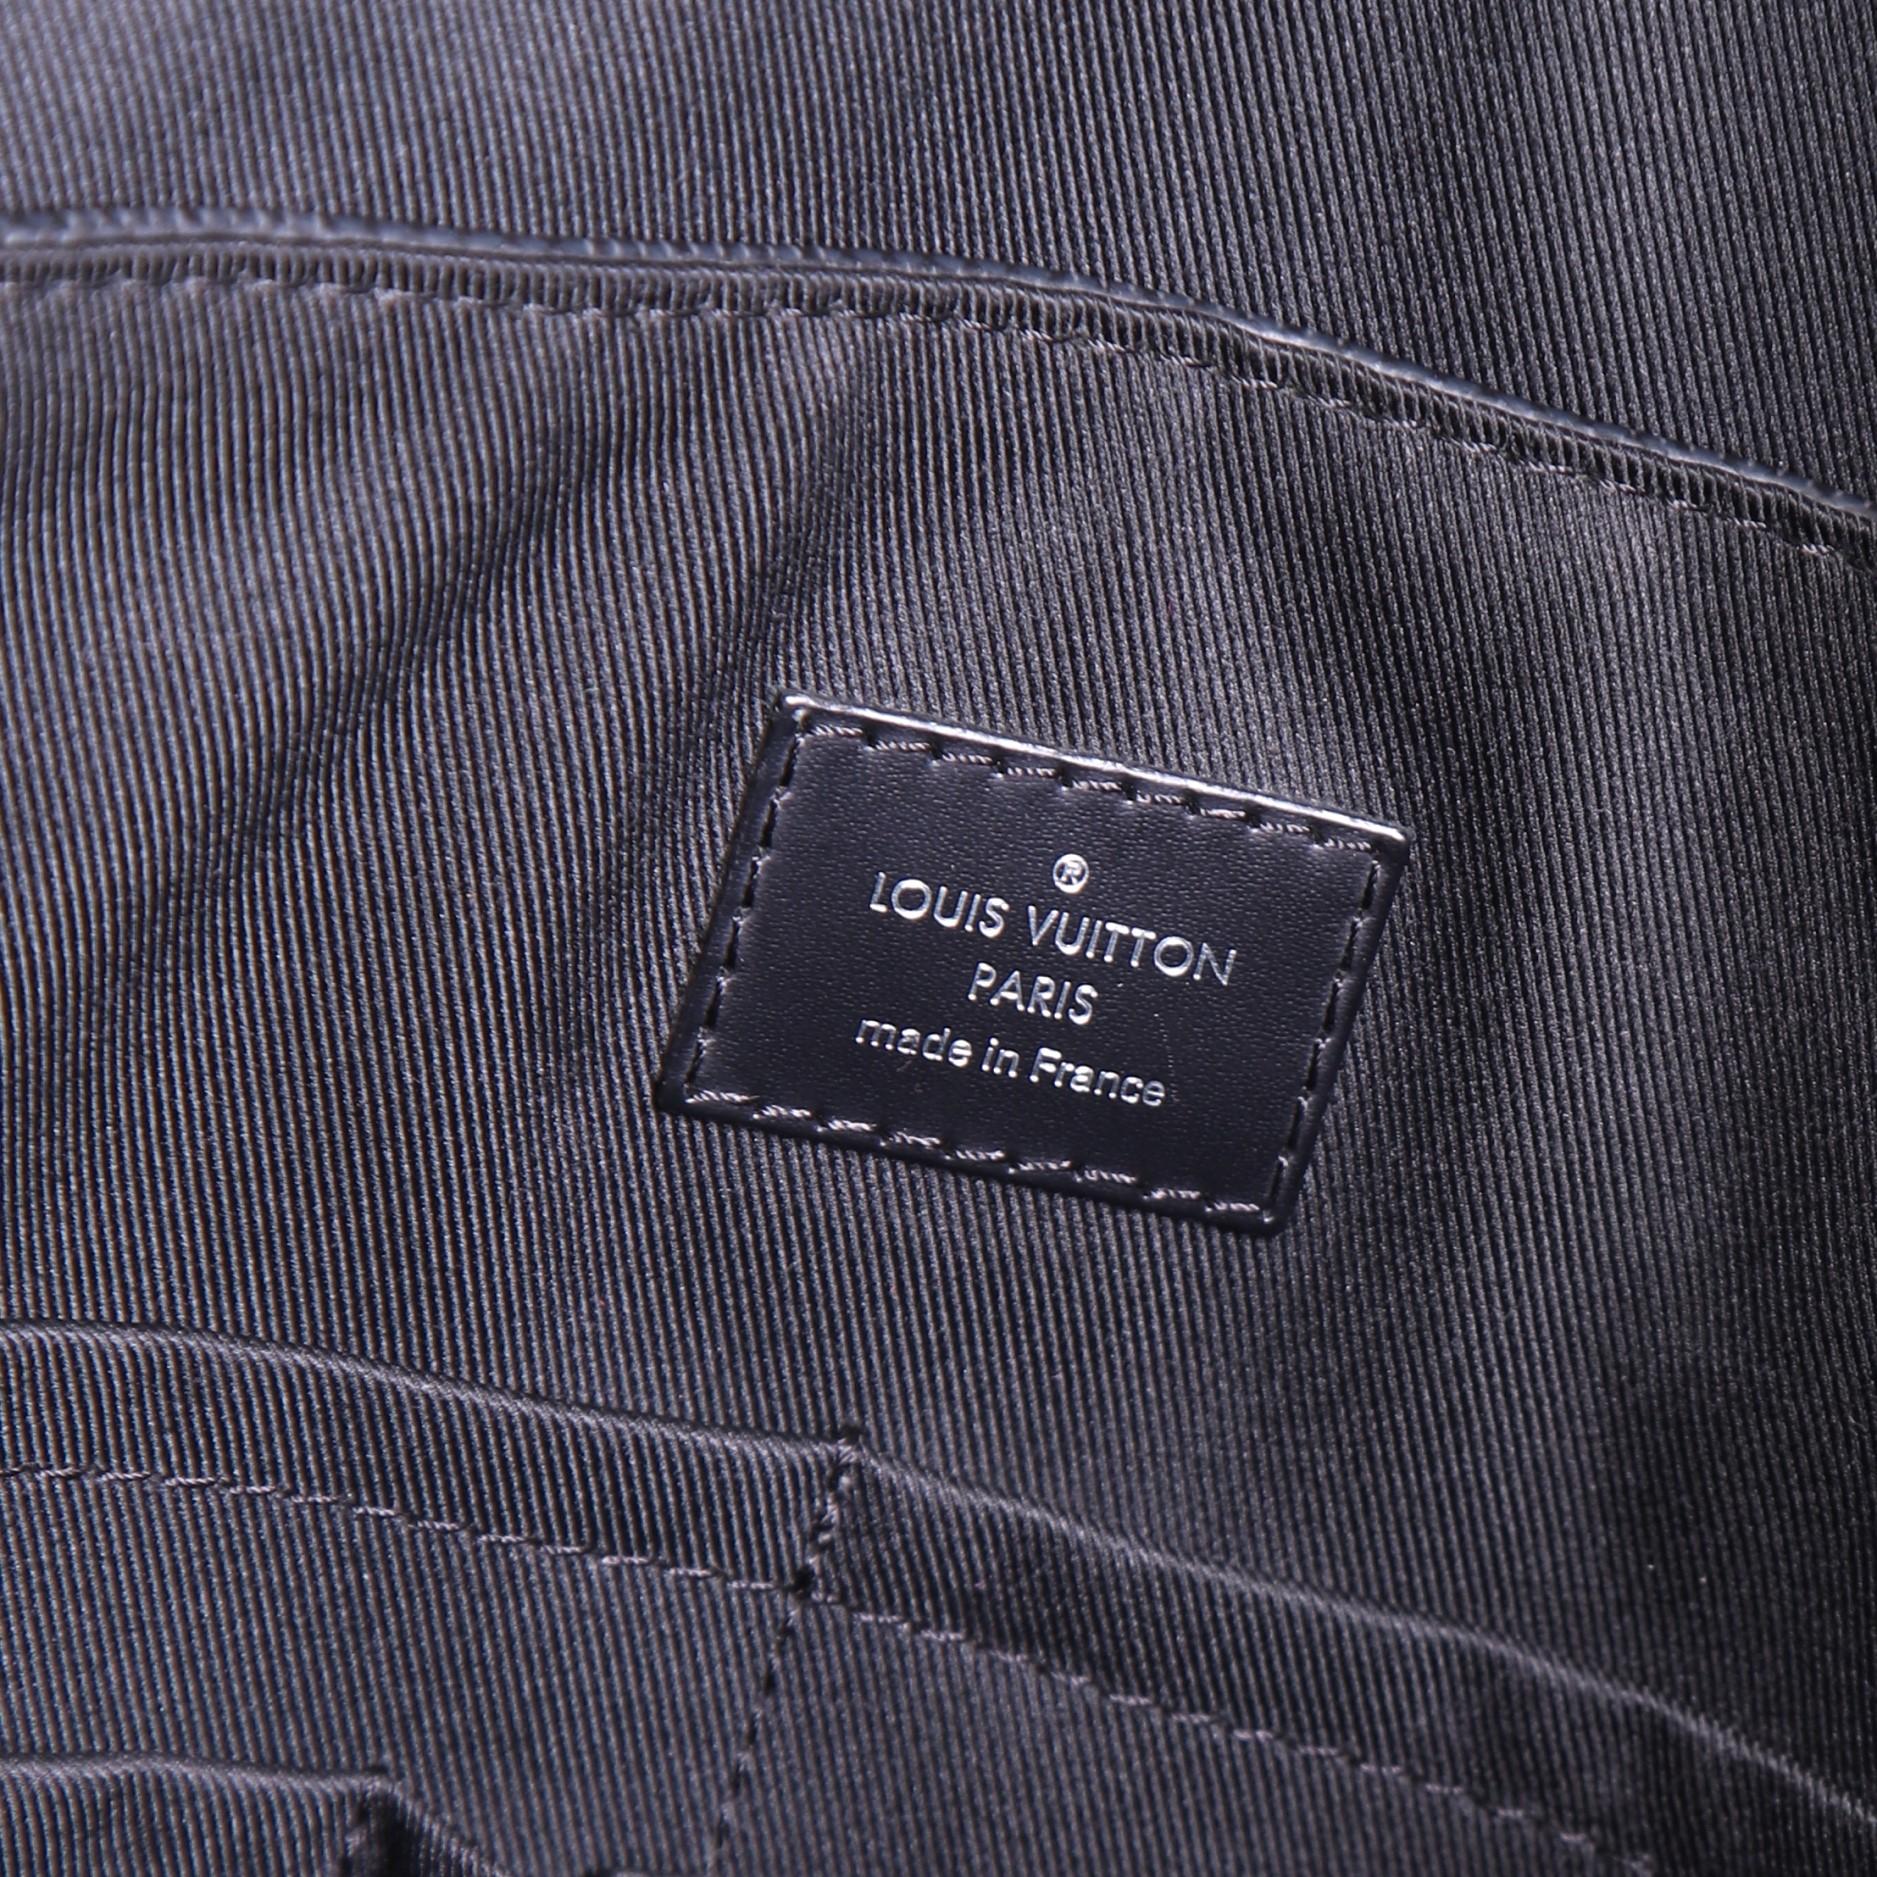 Louis Vuitton Christopher Messenger Bag Damier Graphite 4